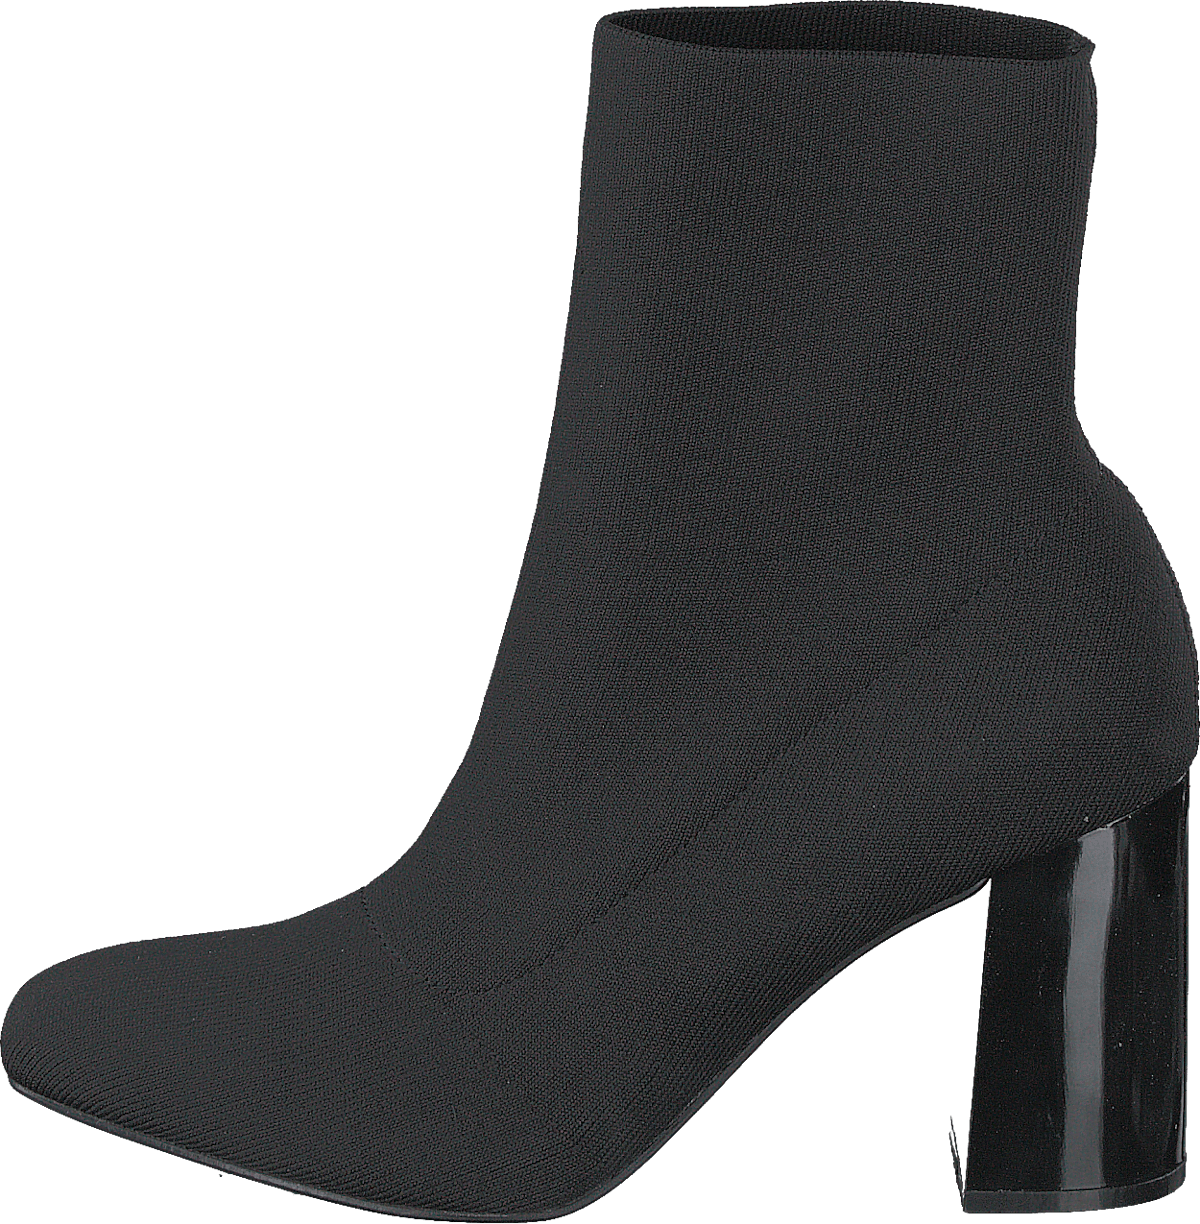 Biaellie Knit Boot Black